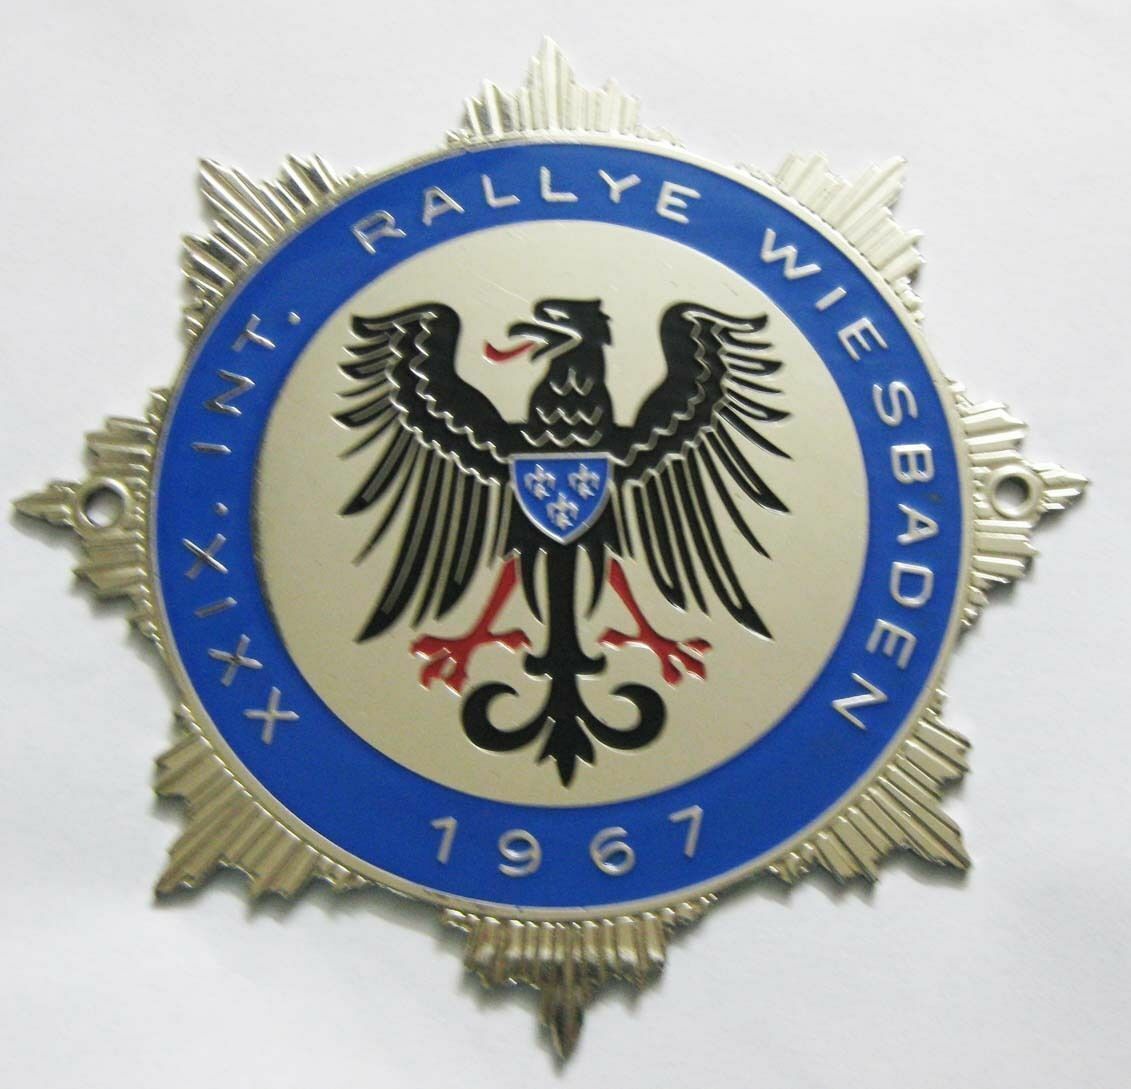 Adac International Rally 1967 car grill badge emblem logos metal enamled badge